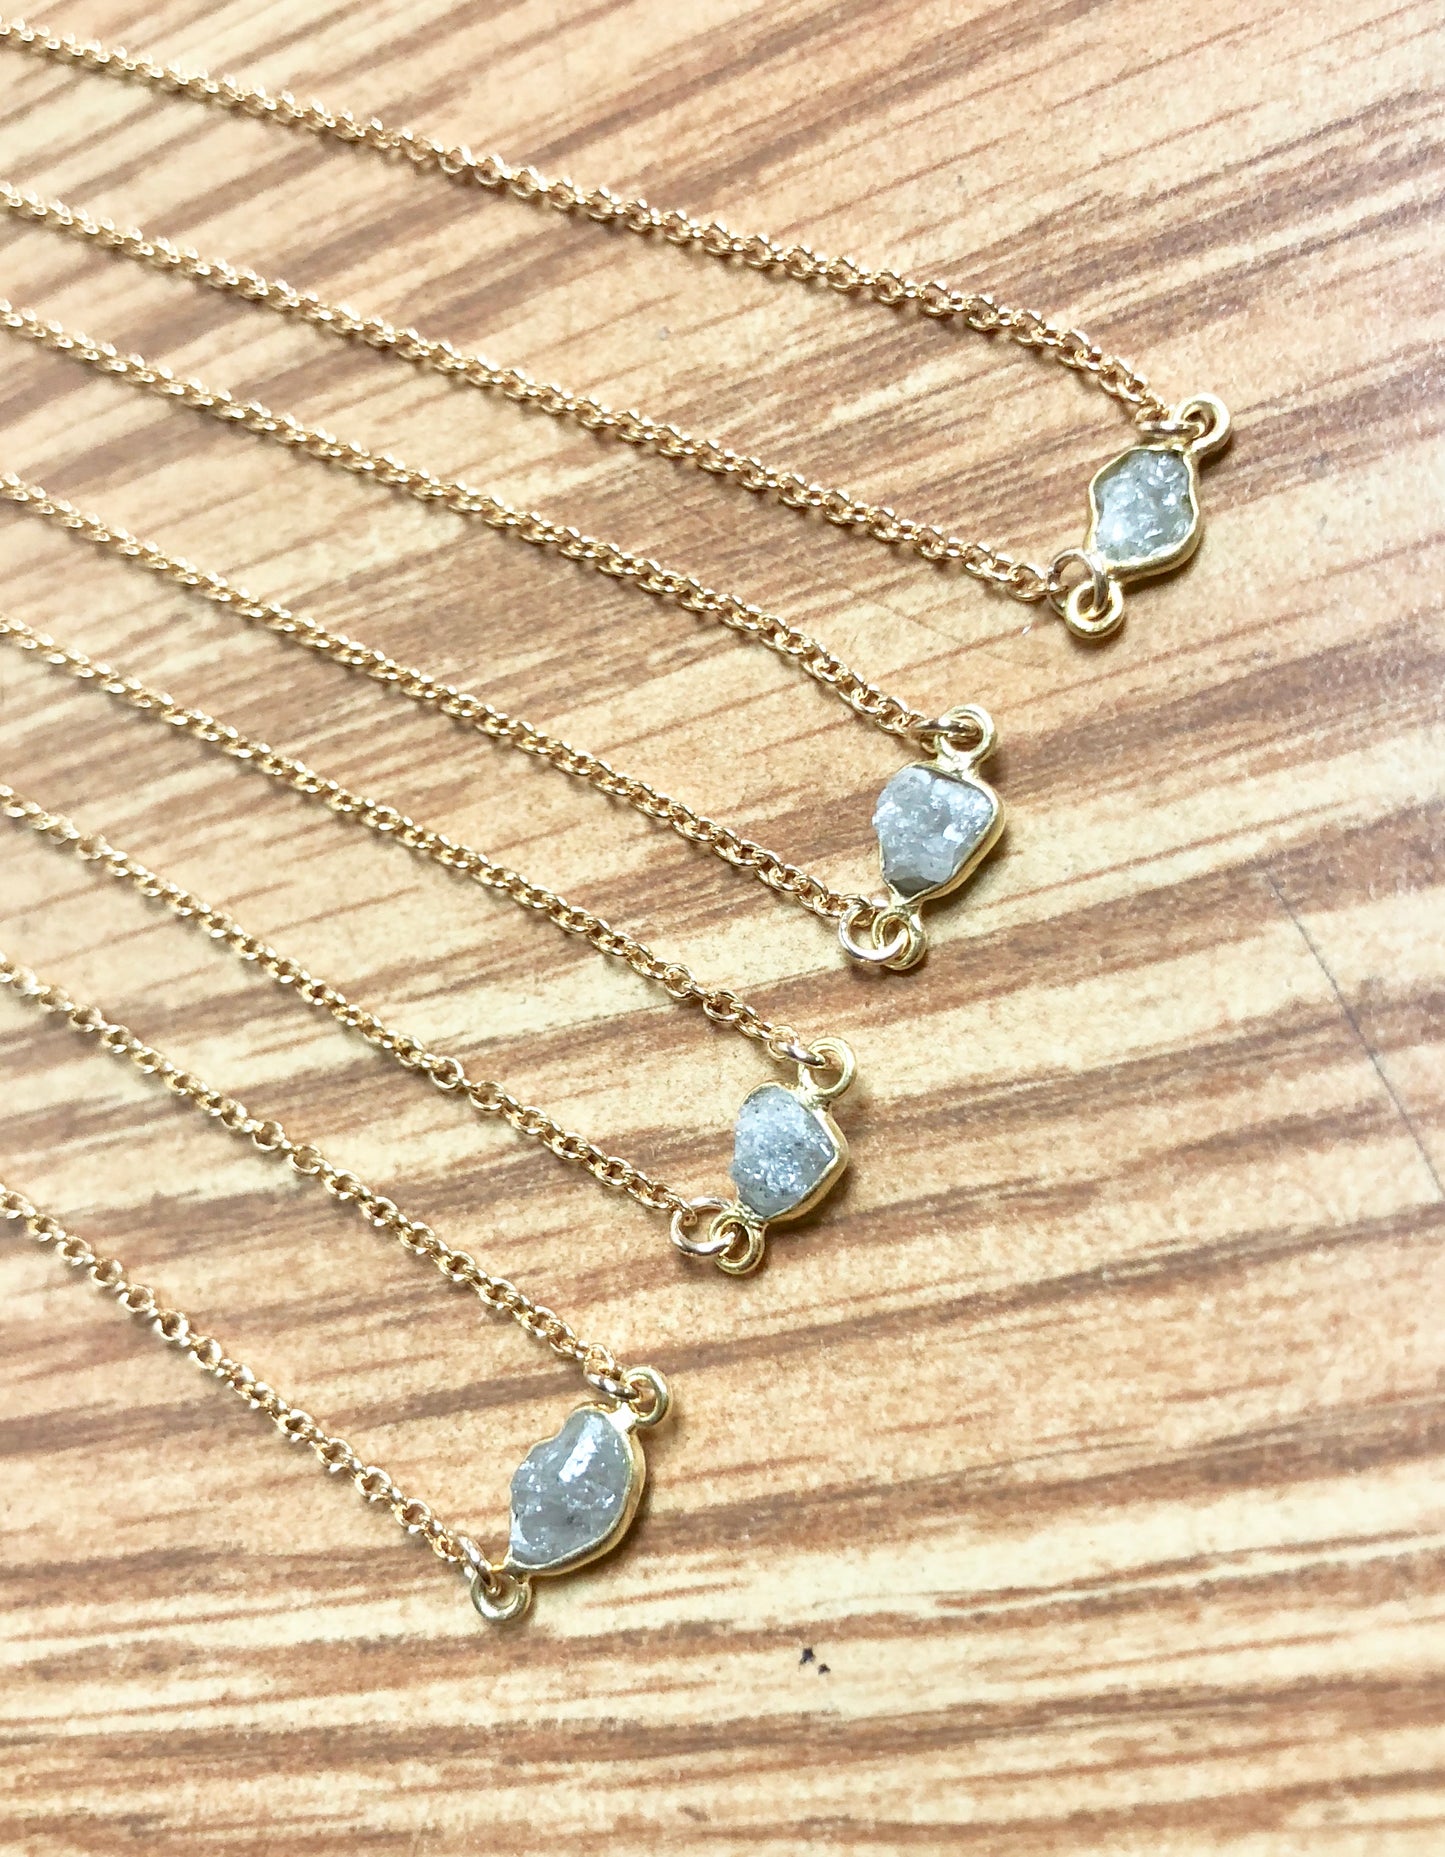 Modern Minimalist Raw Diamond Necklace - Yellow Gold Filled